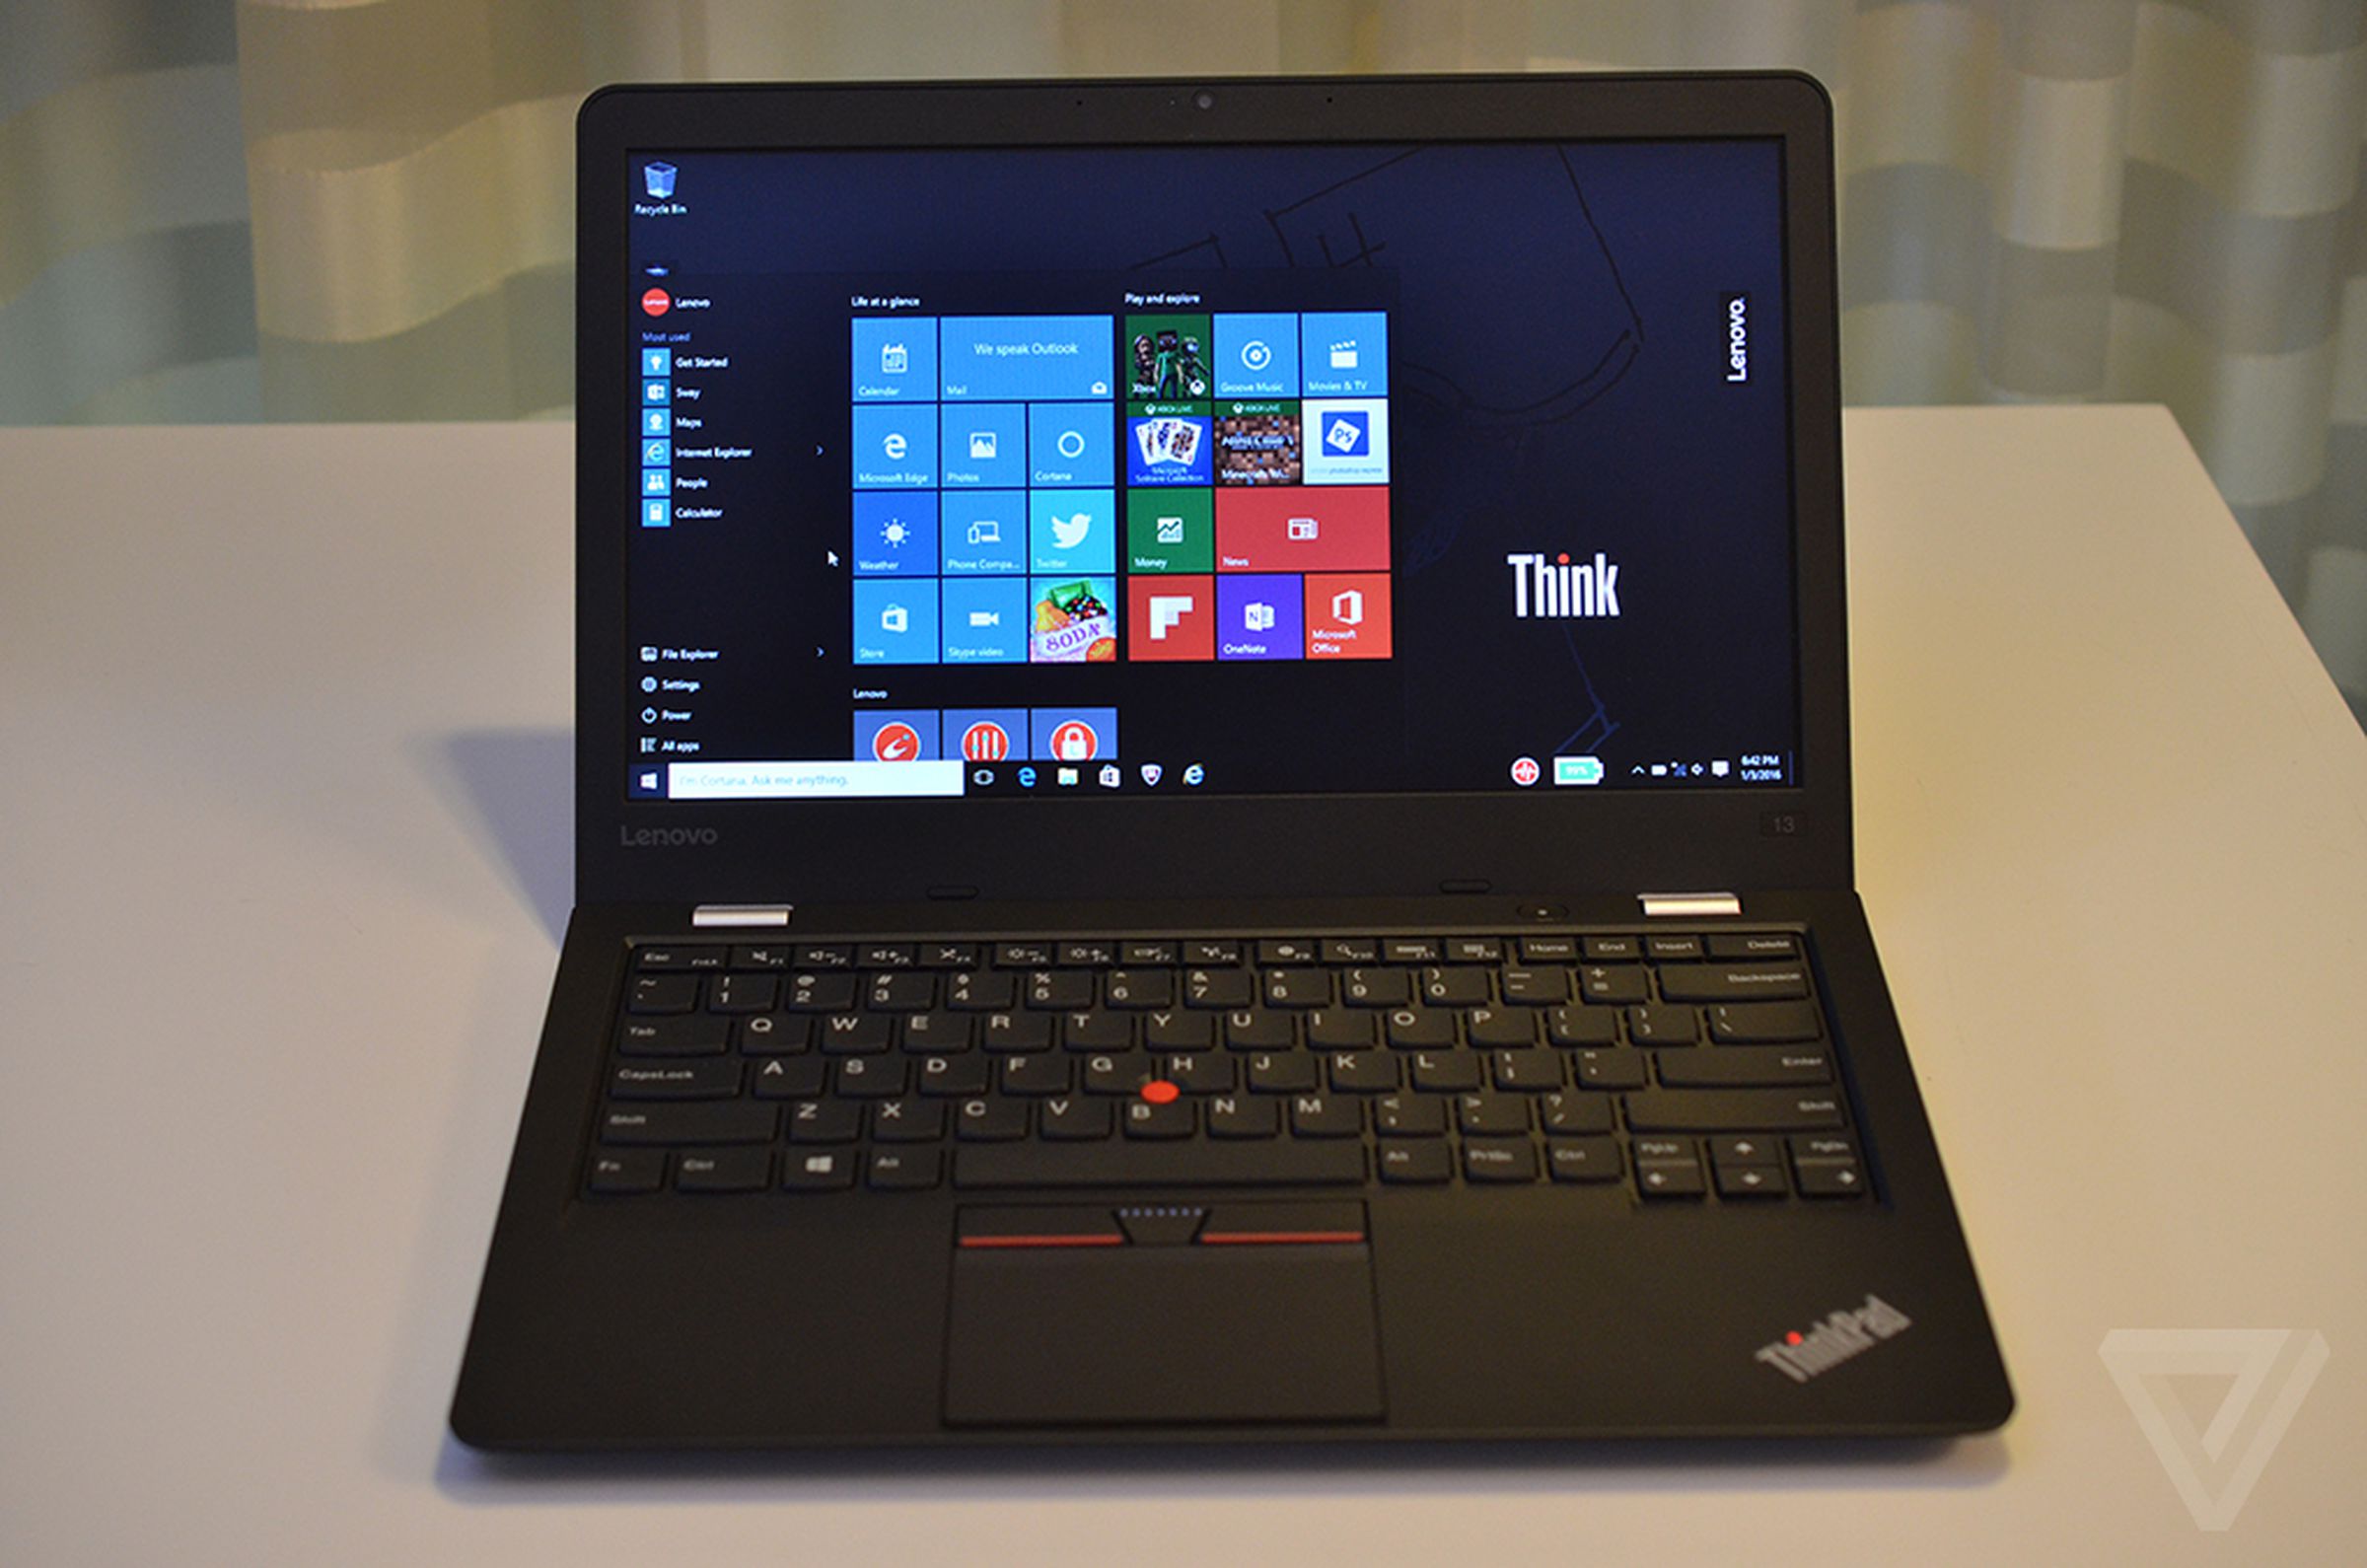 Lenovo ThinkPad 13 hands-on photos